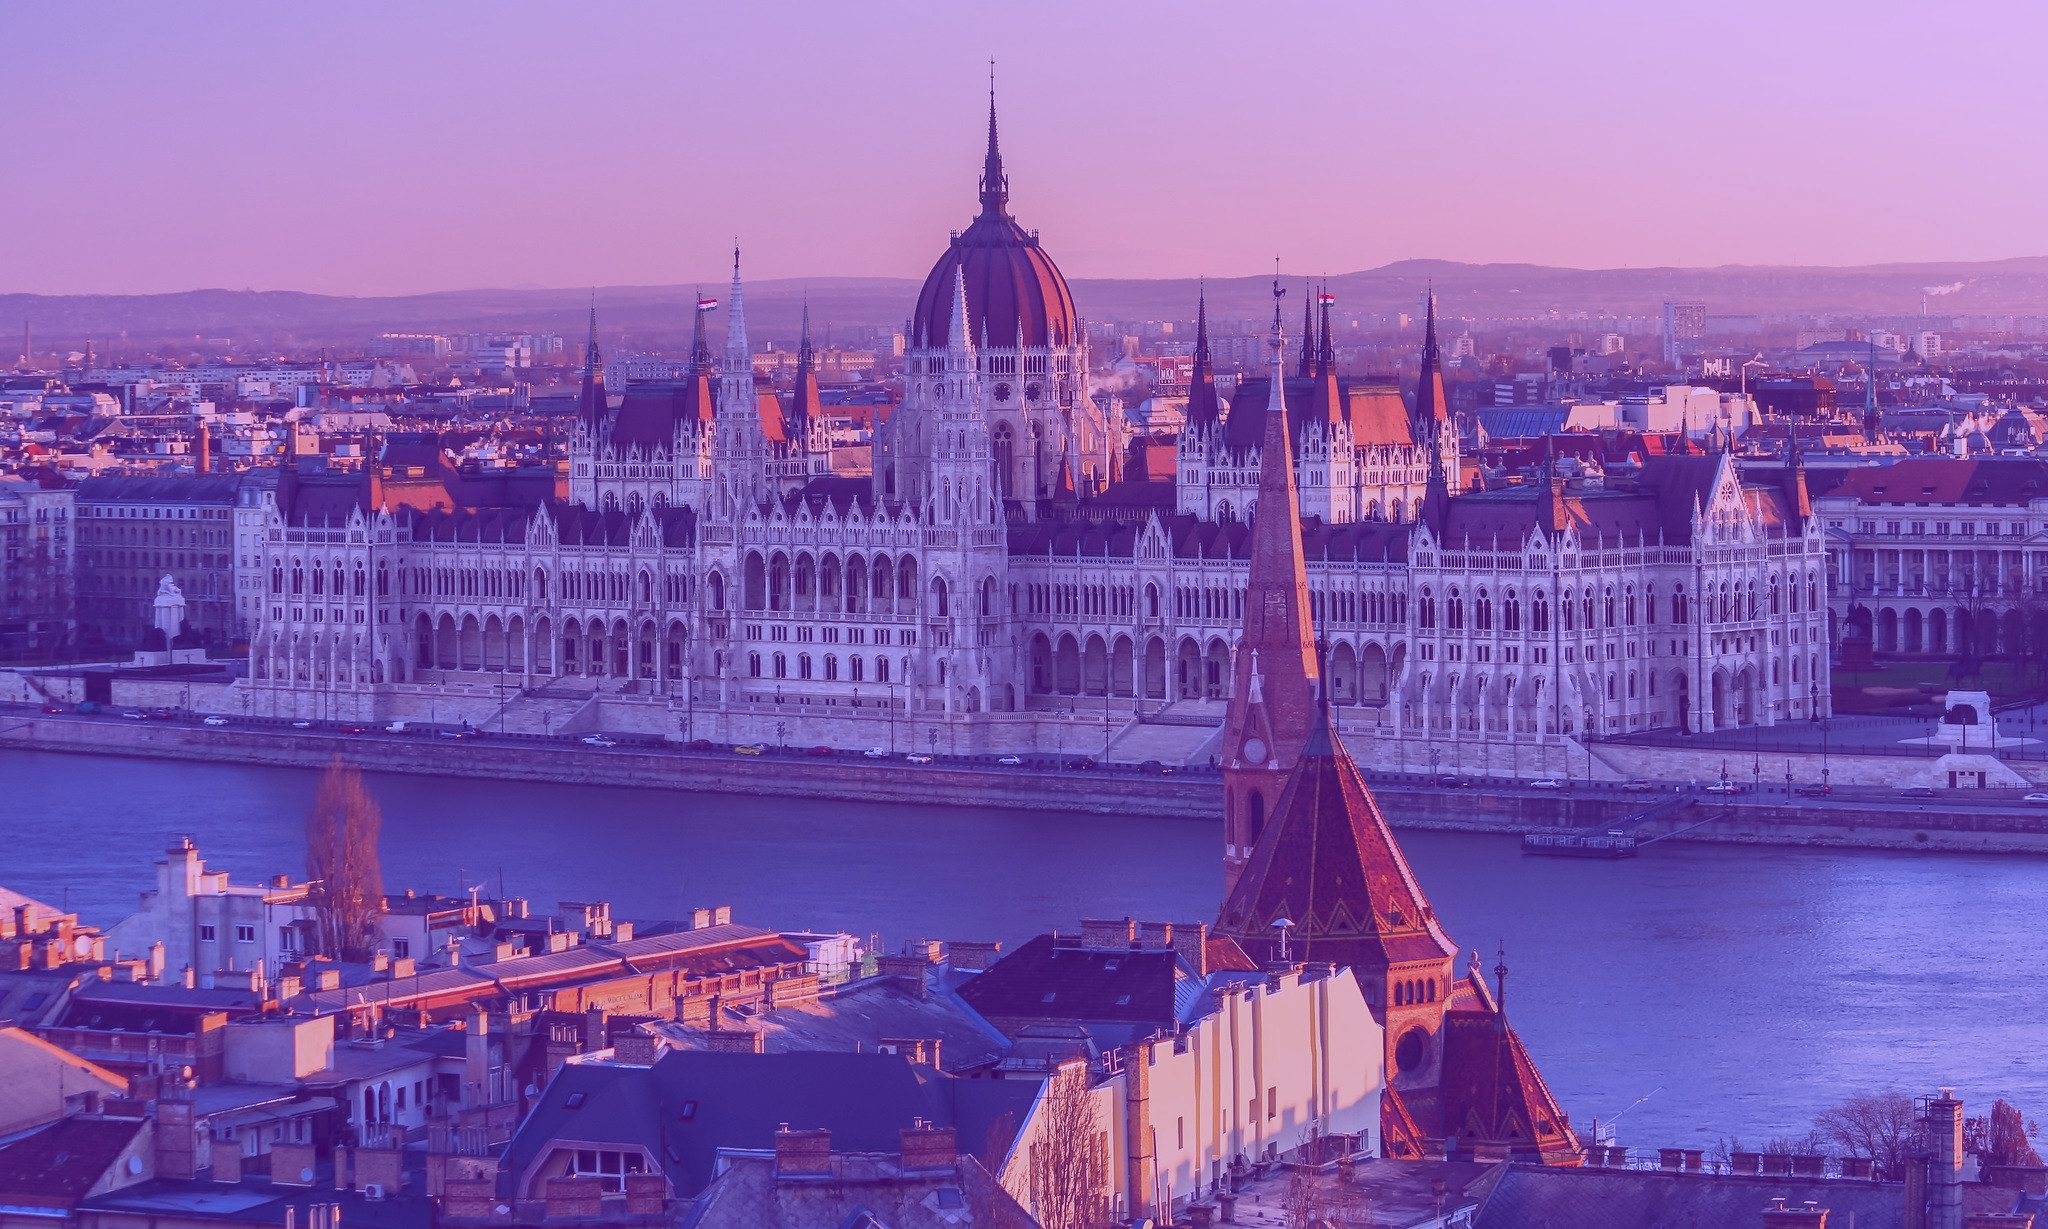 Gergely Kováts – University Governance Reform in an Illiberal Democracy: Public Interest Trusts in Hungary